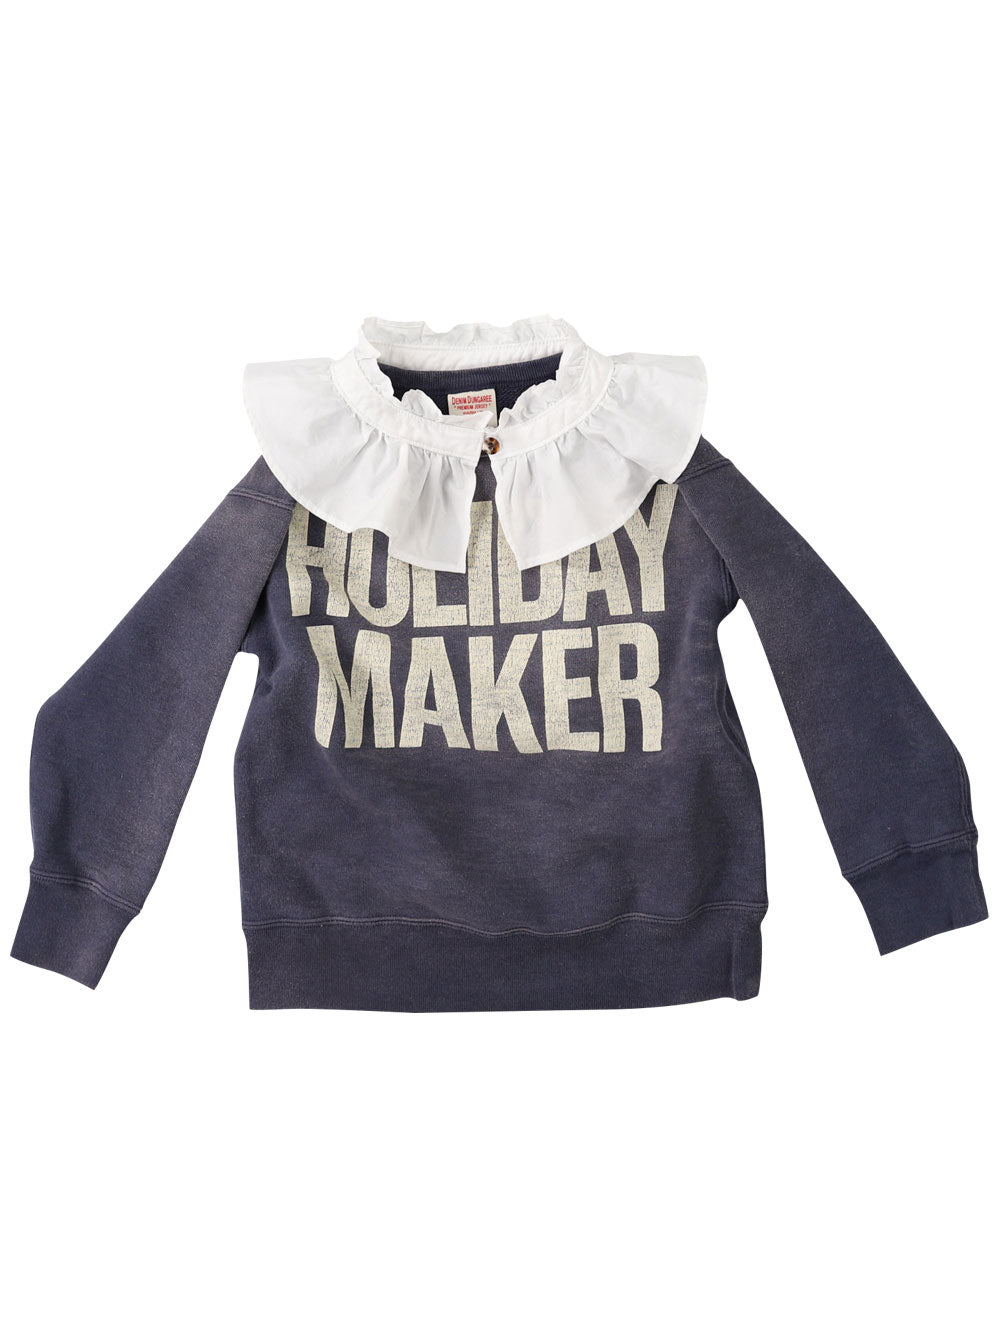 PREORDER: Holiday Maker Navy Sweatshirt